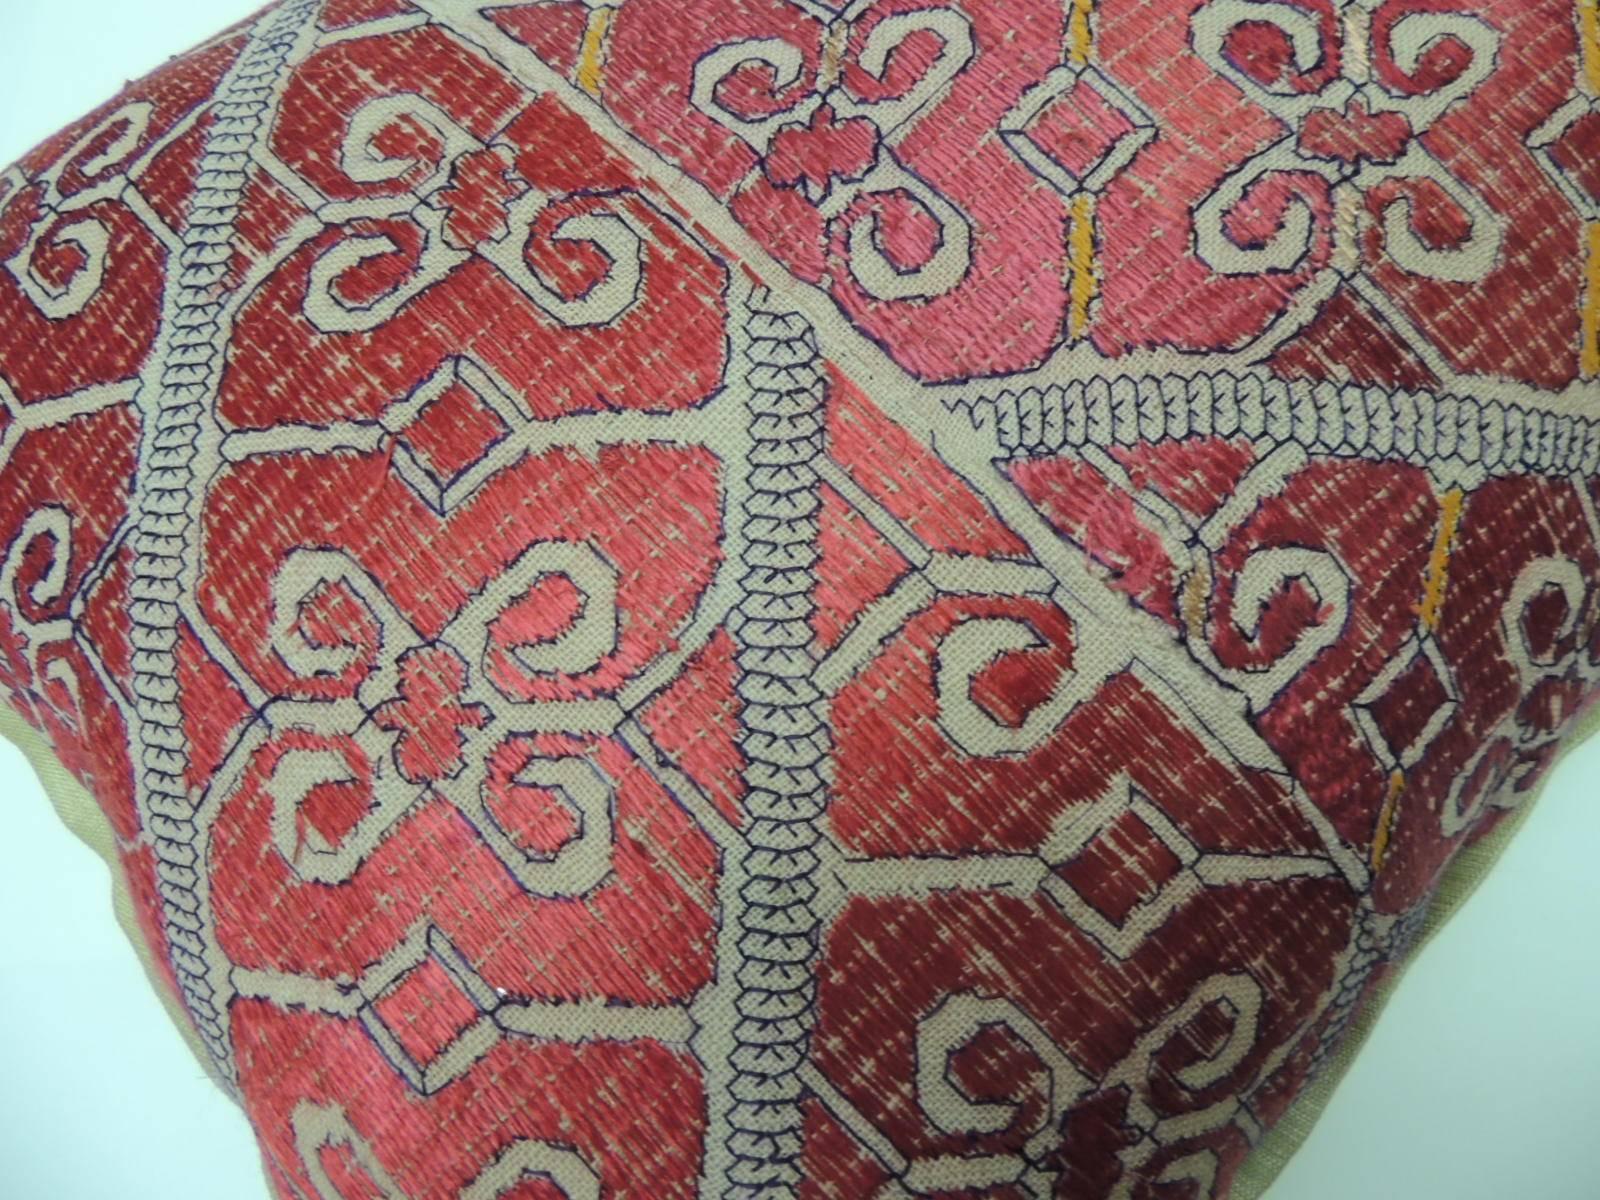 Moorish 19th Century Red Moroccan Embroidery Bolster Decorative Pillow